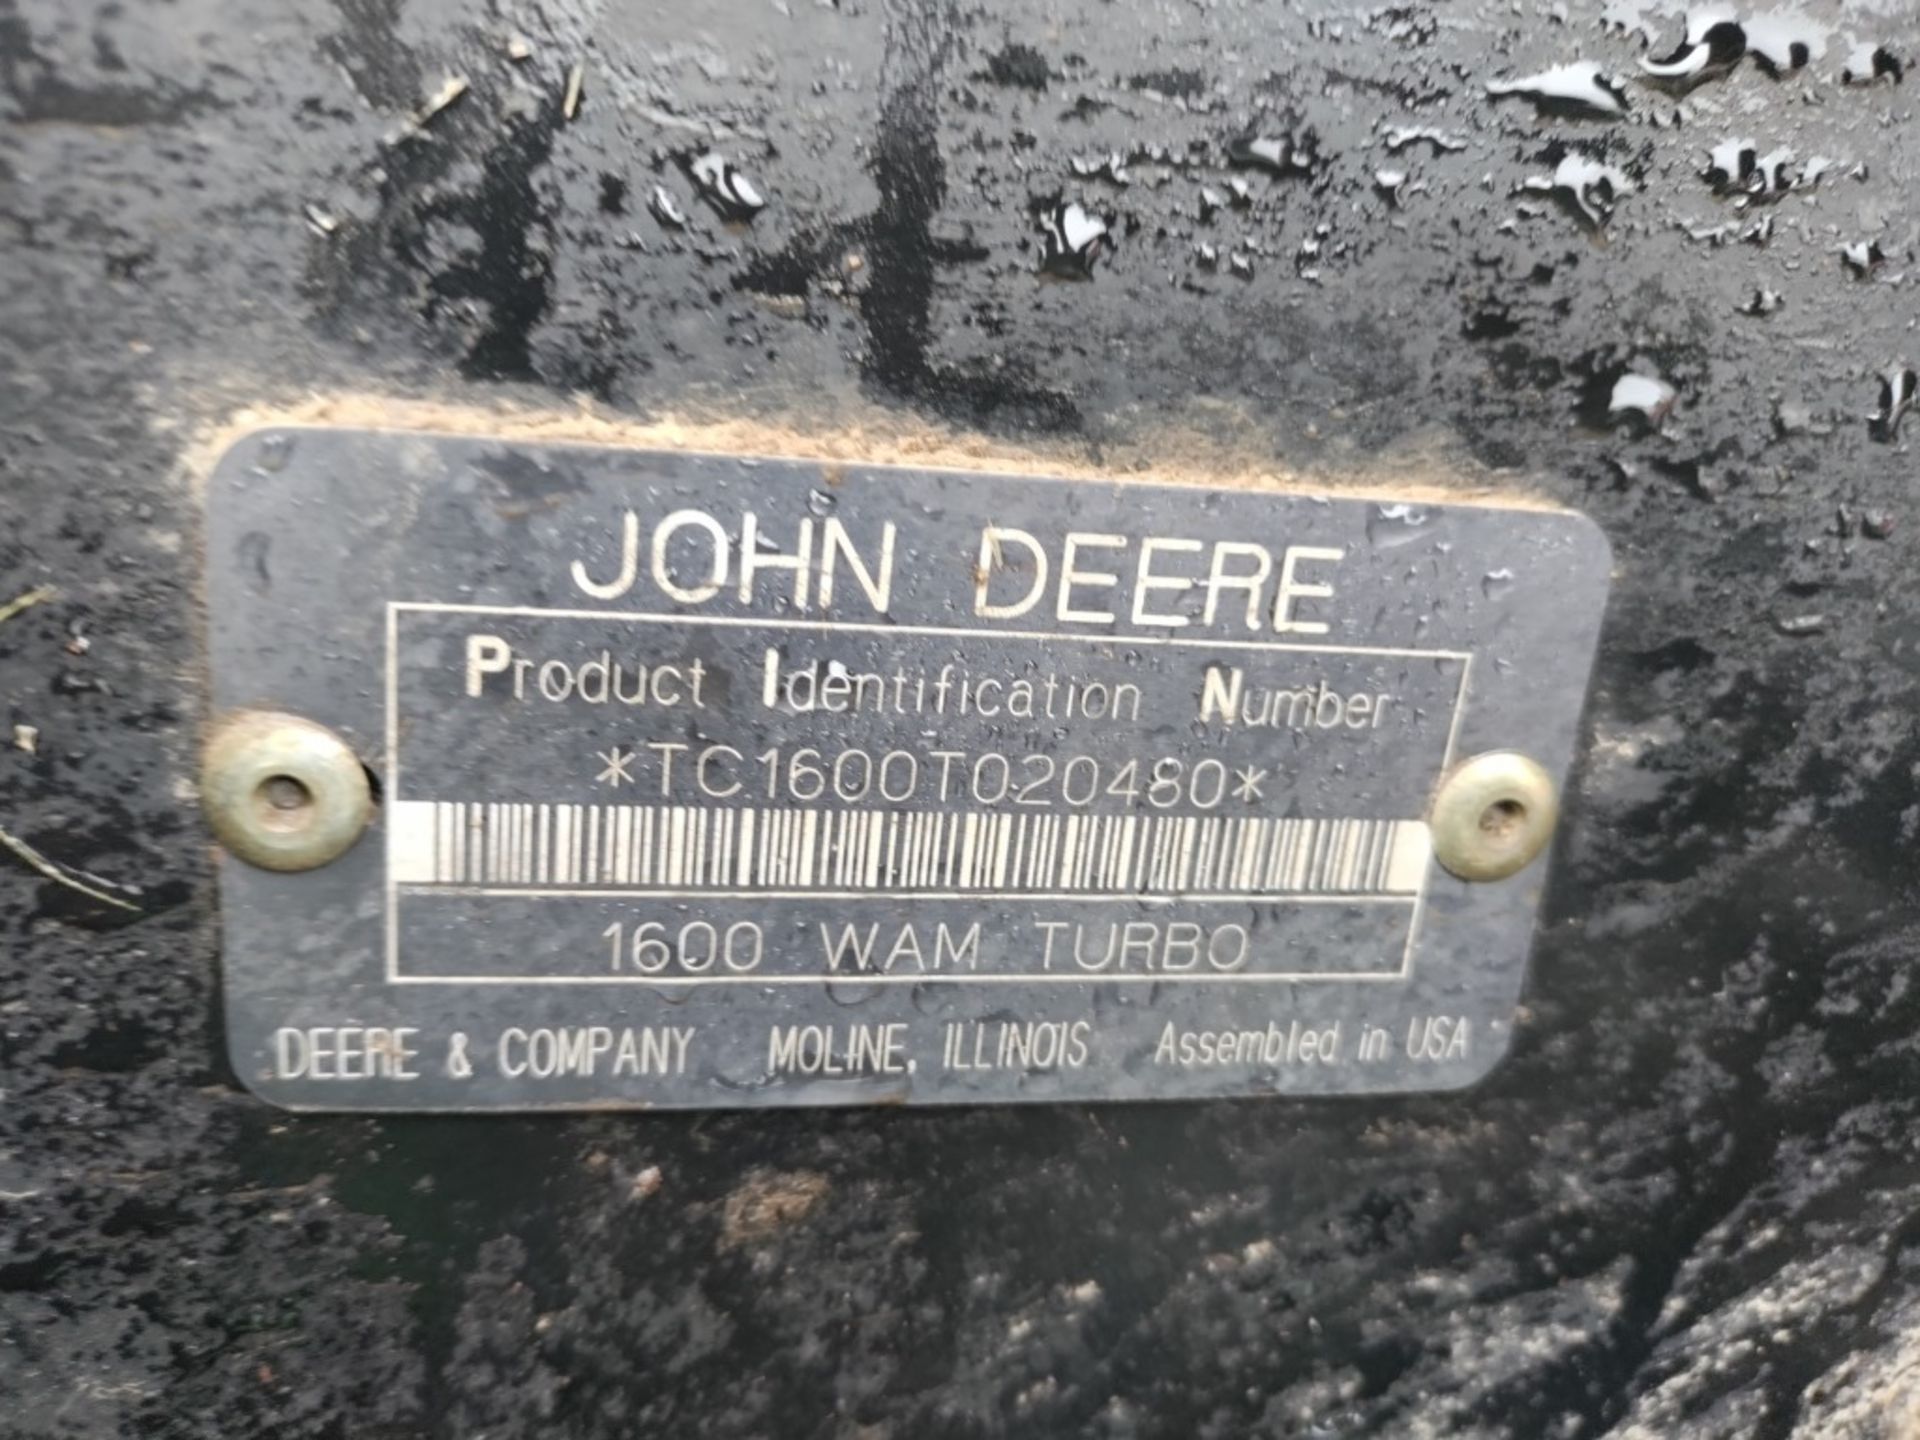 John Deere 1600 Batwing Mower - Image 19 of 19